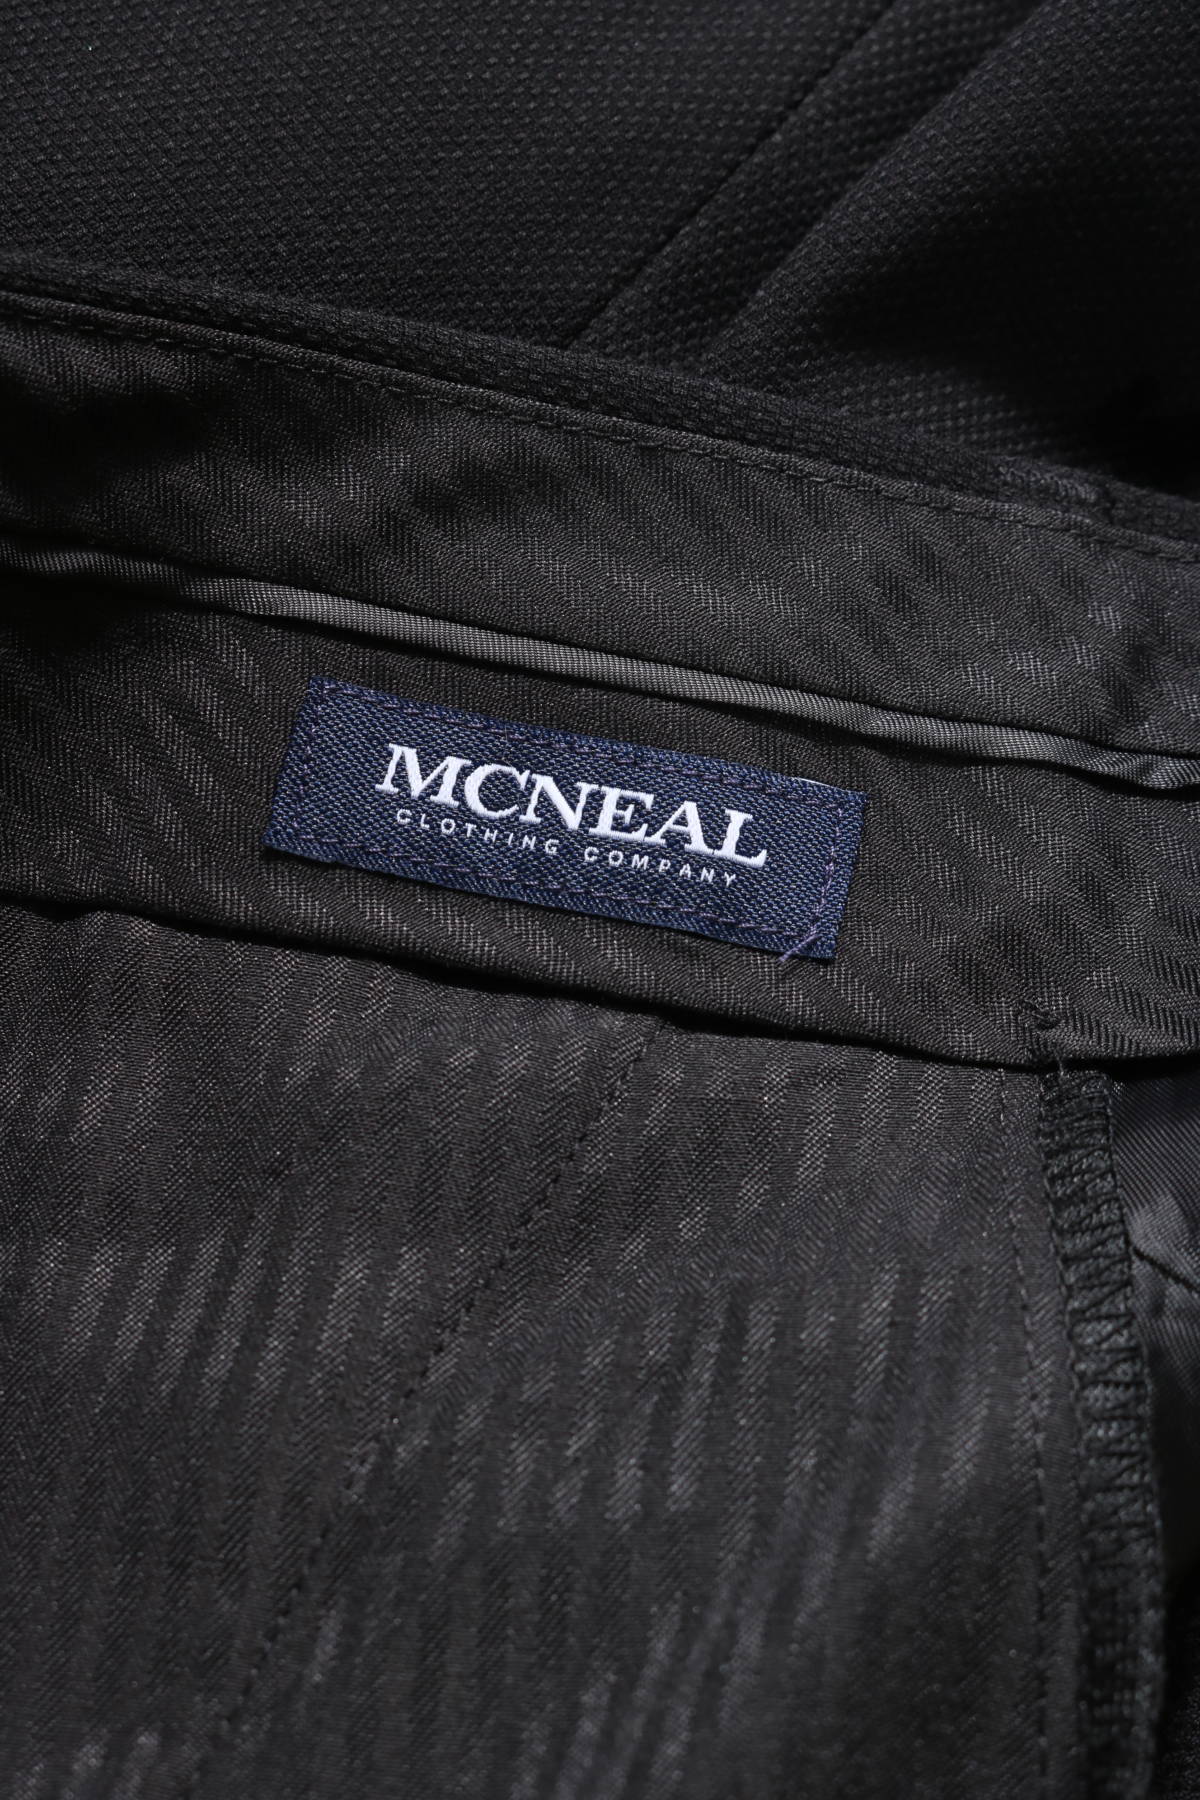 Официален панталон MC NEAL3